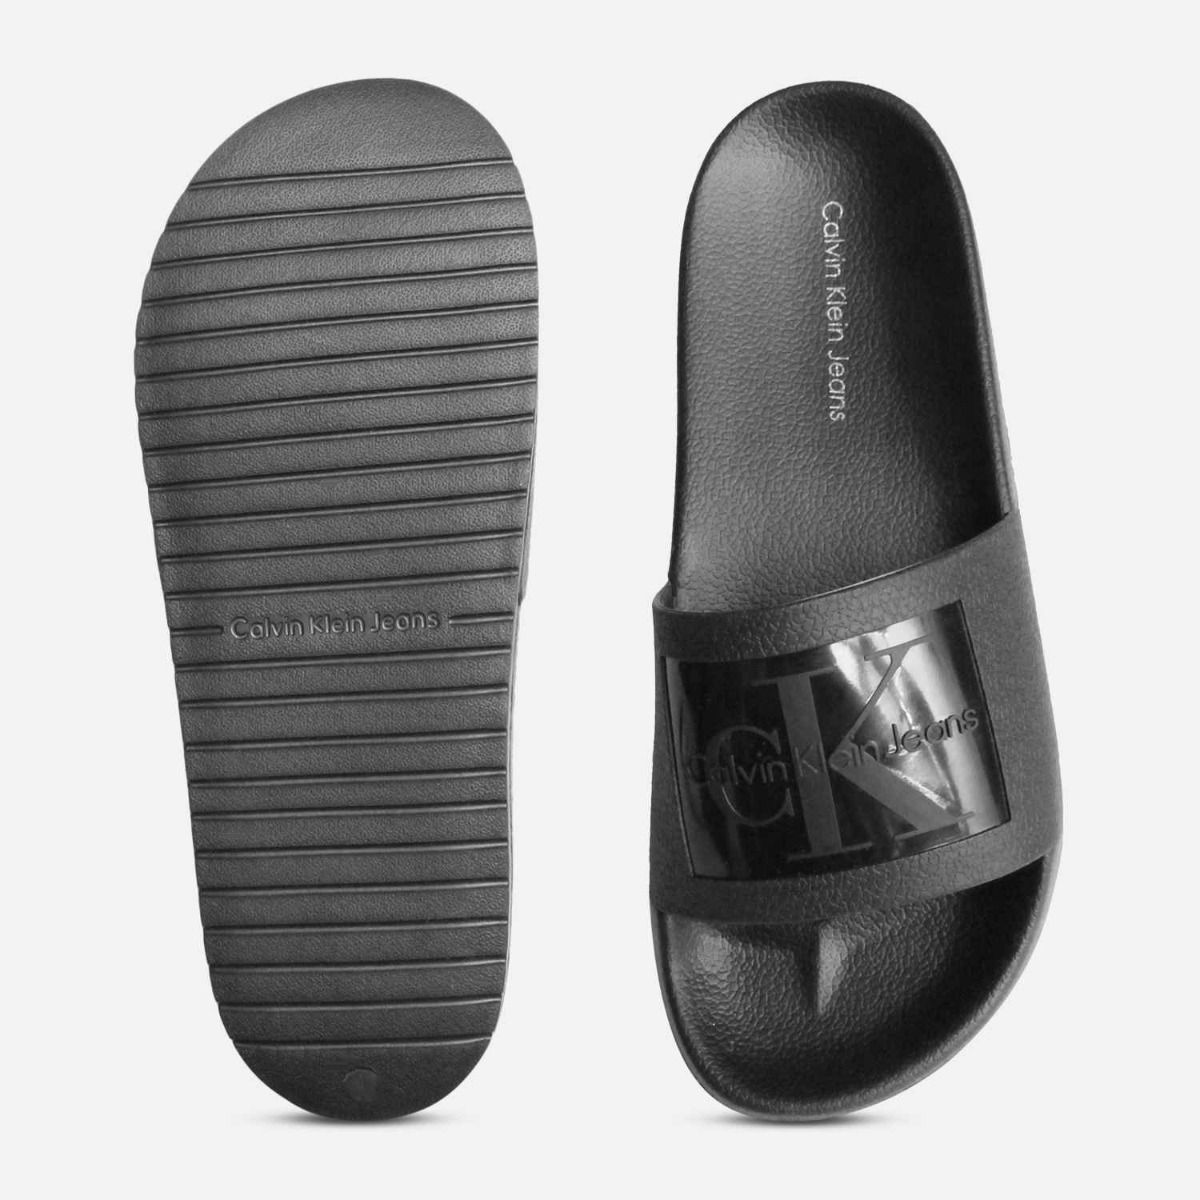 ck slippers online